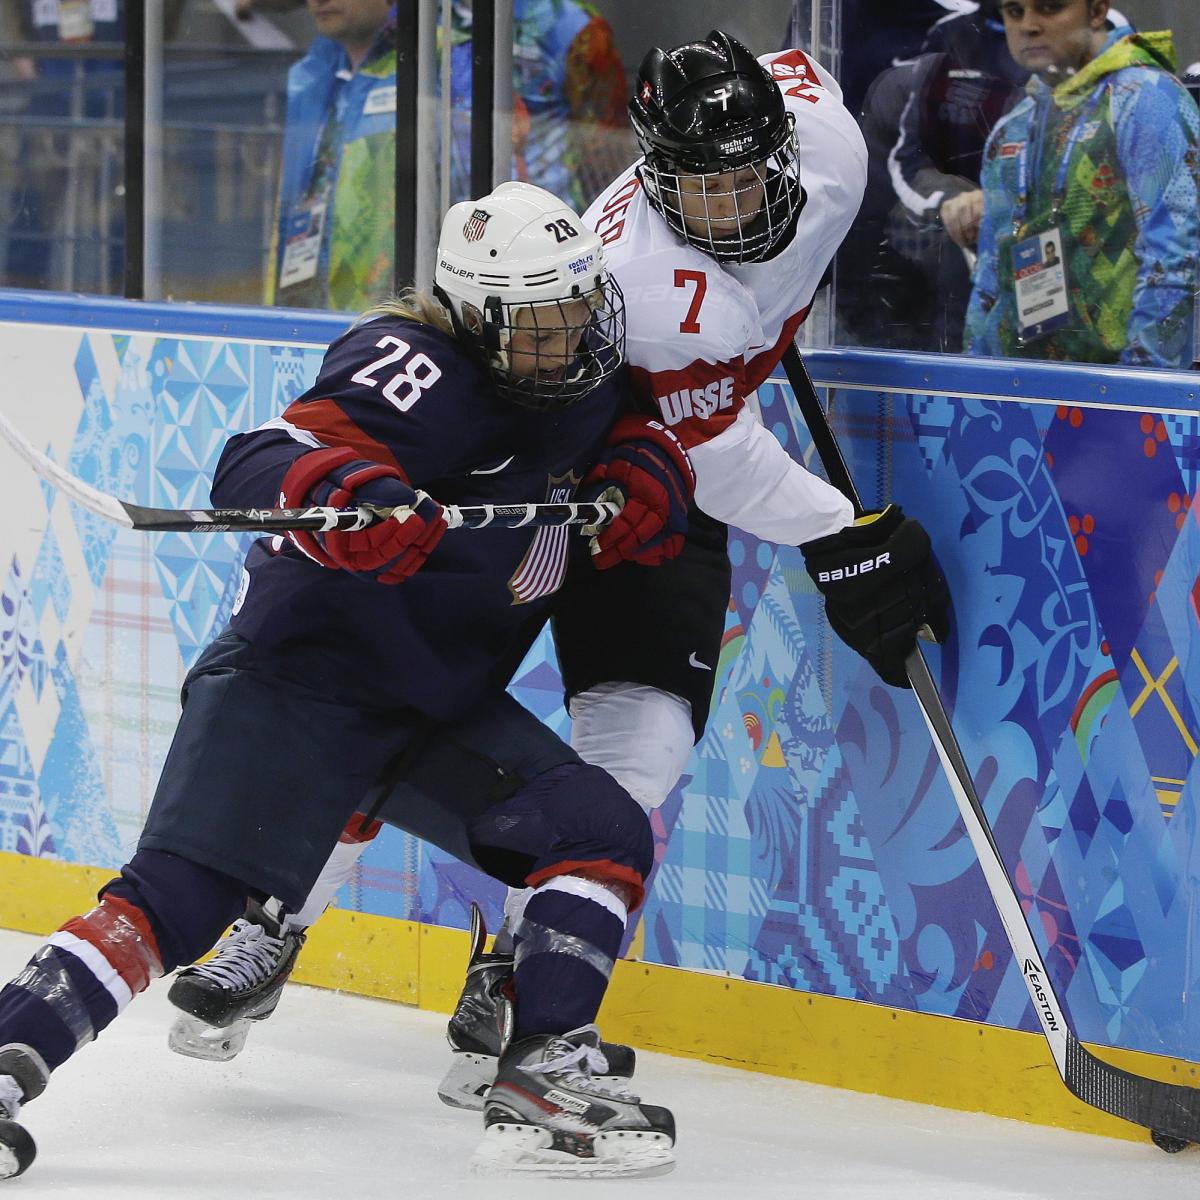 Watch the United States women's hockey team brawl with Canada